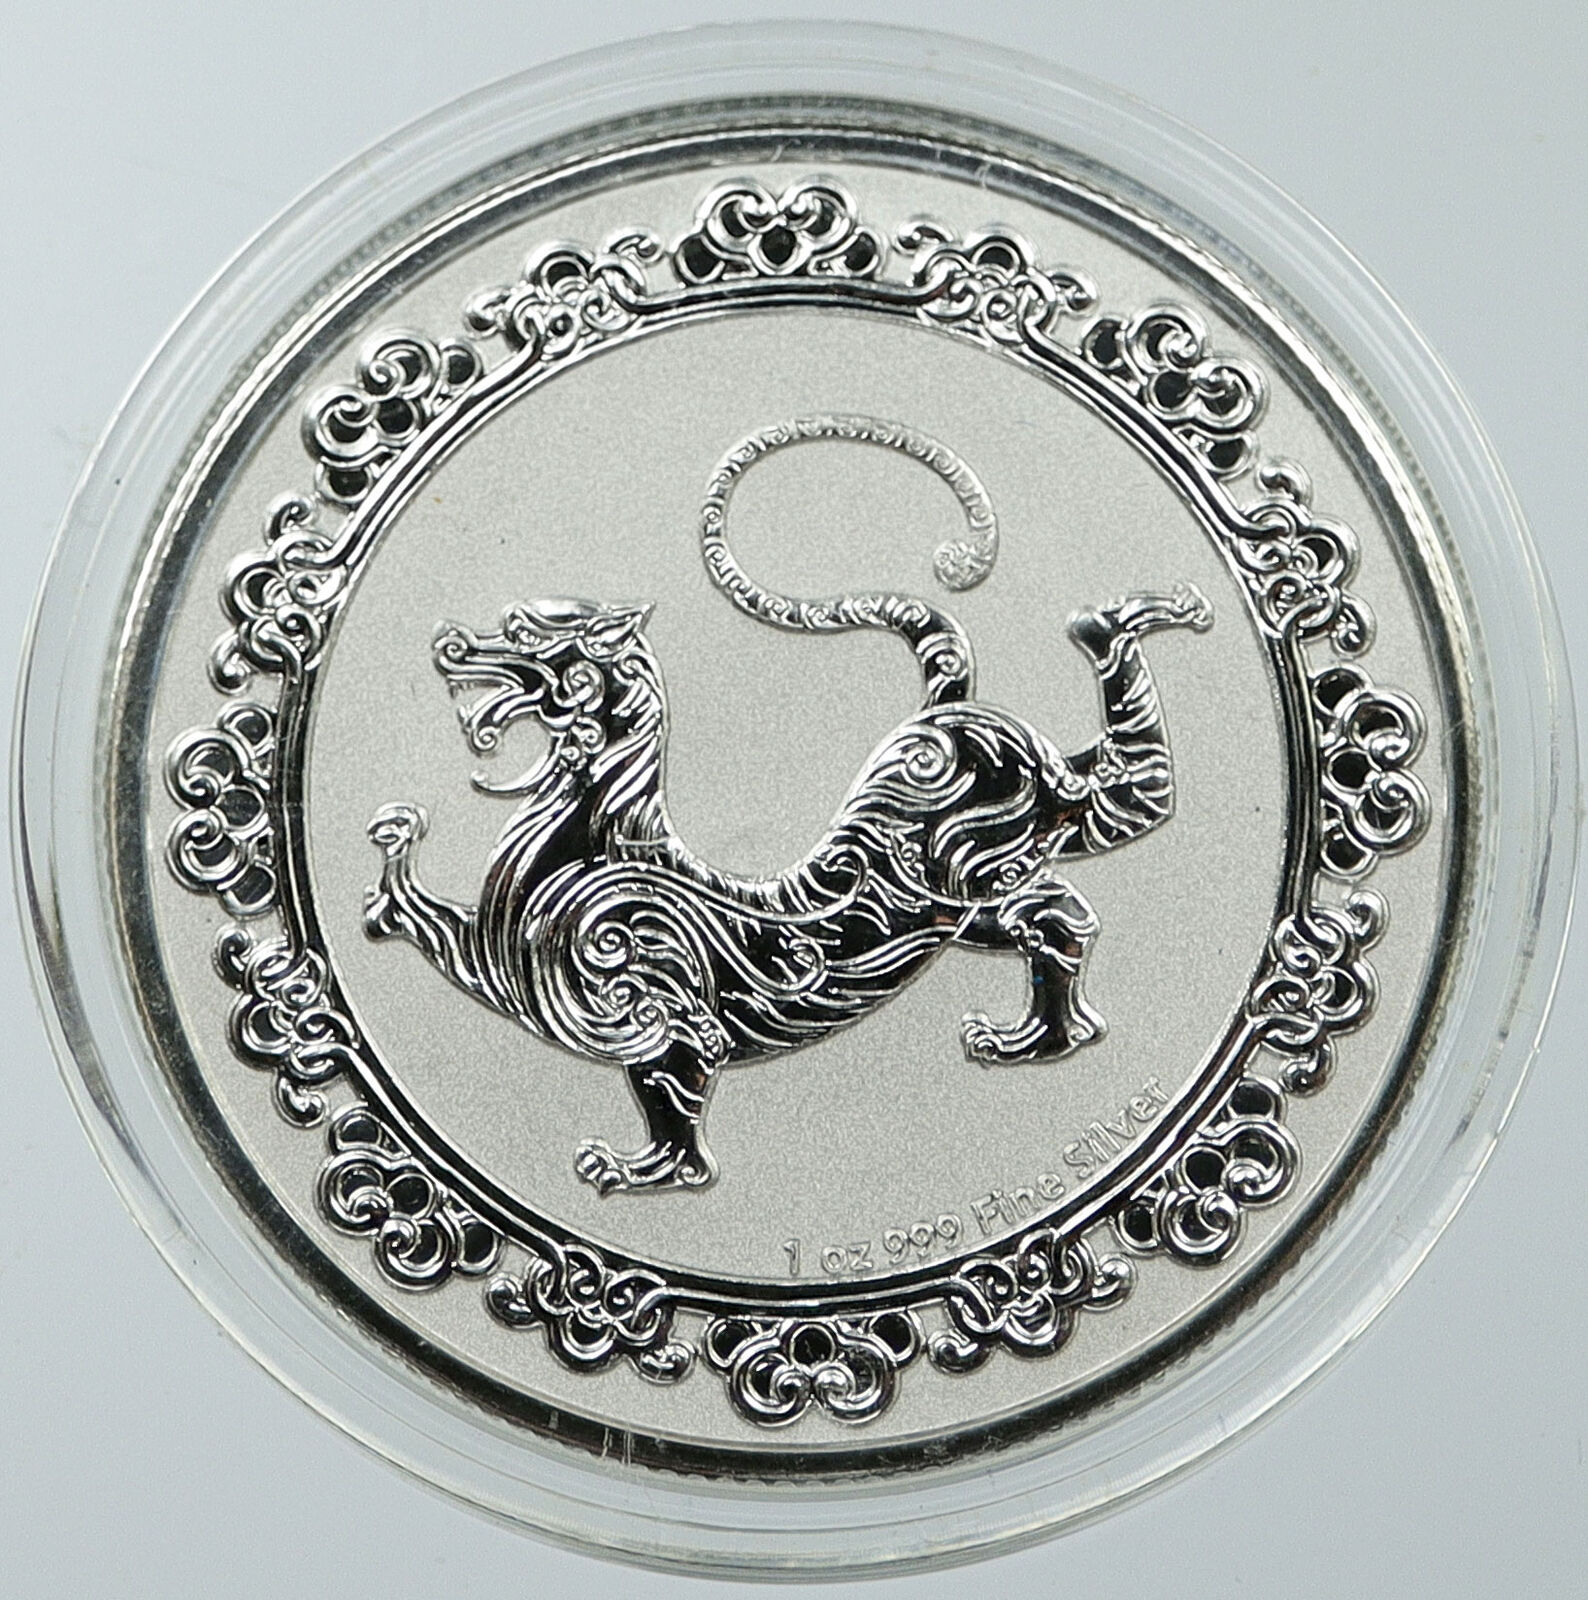 2019 NIUE UK Elizabeth II WHITE TIGER 1 OZ Proof Silver $2 Dollar Coin i116537